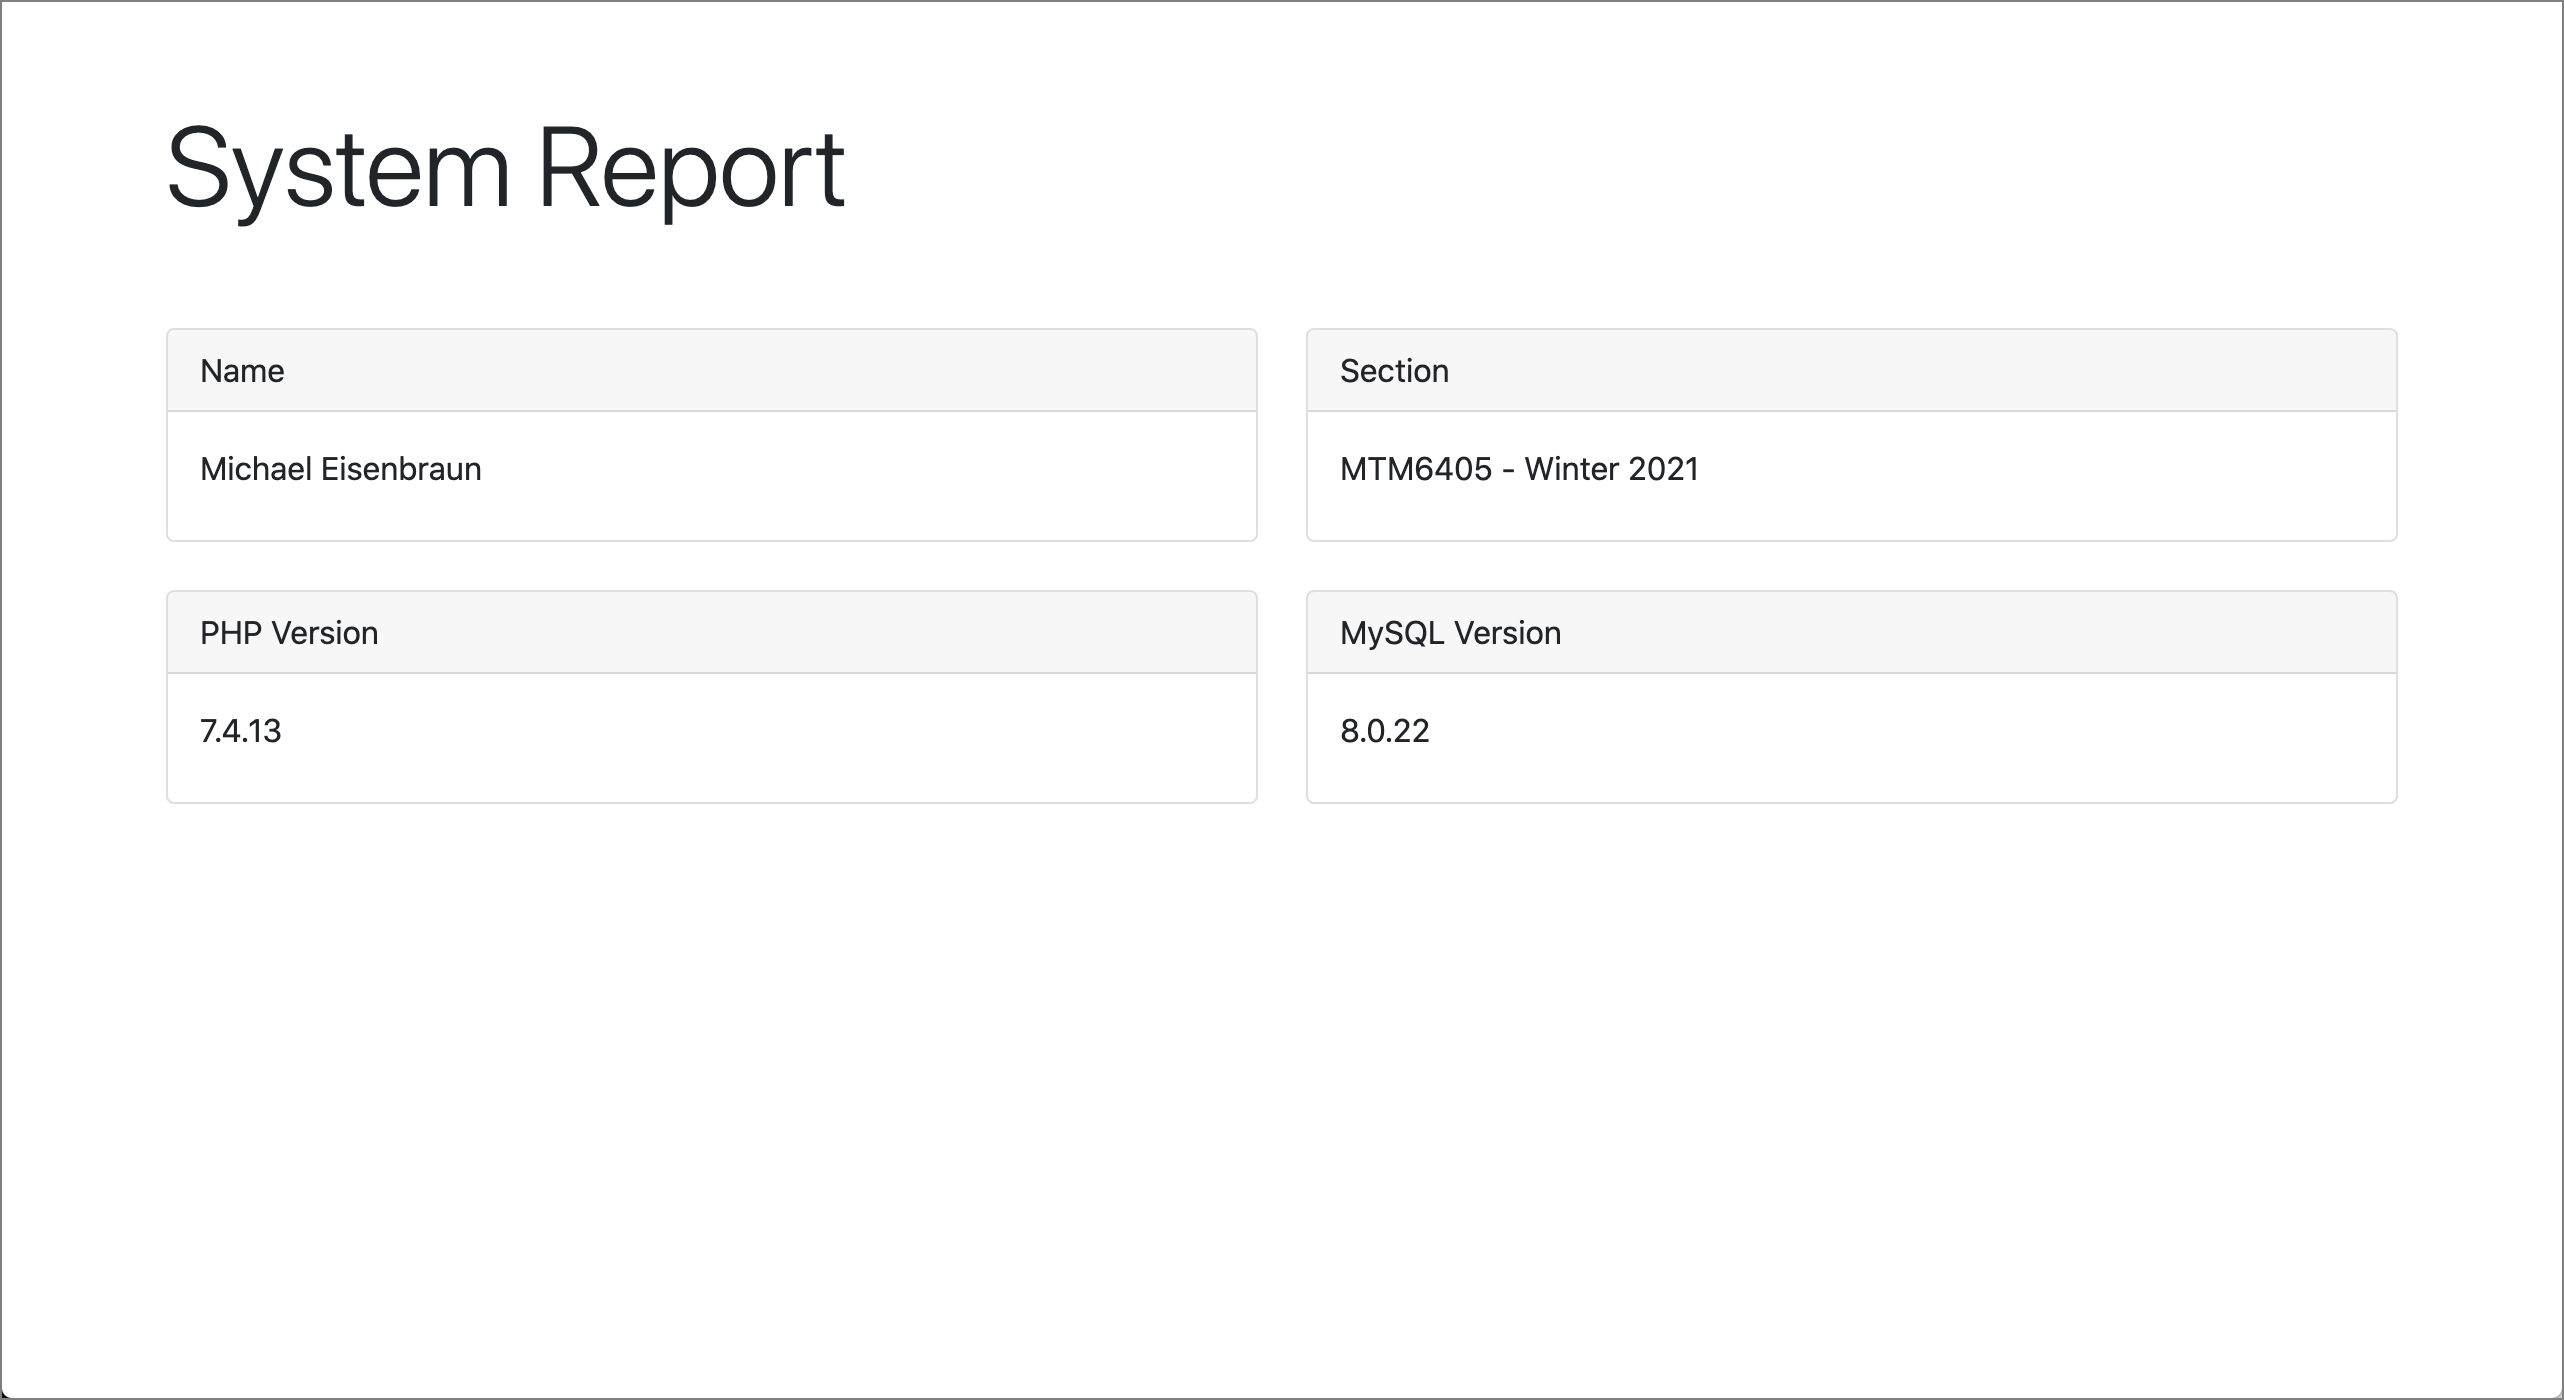 System Report screenshot example